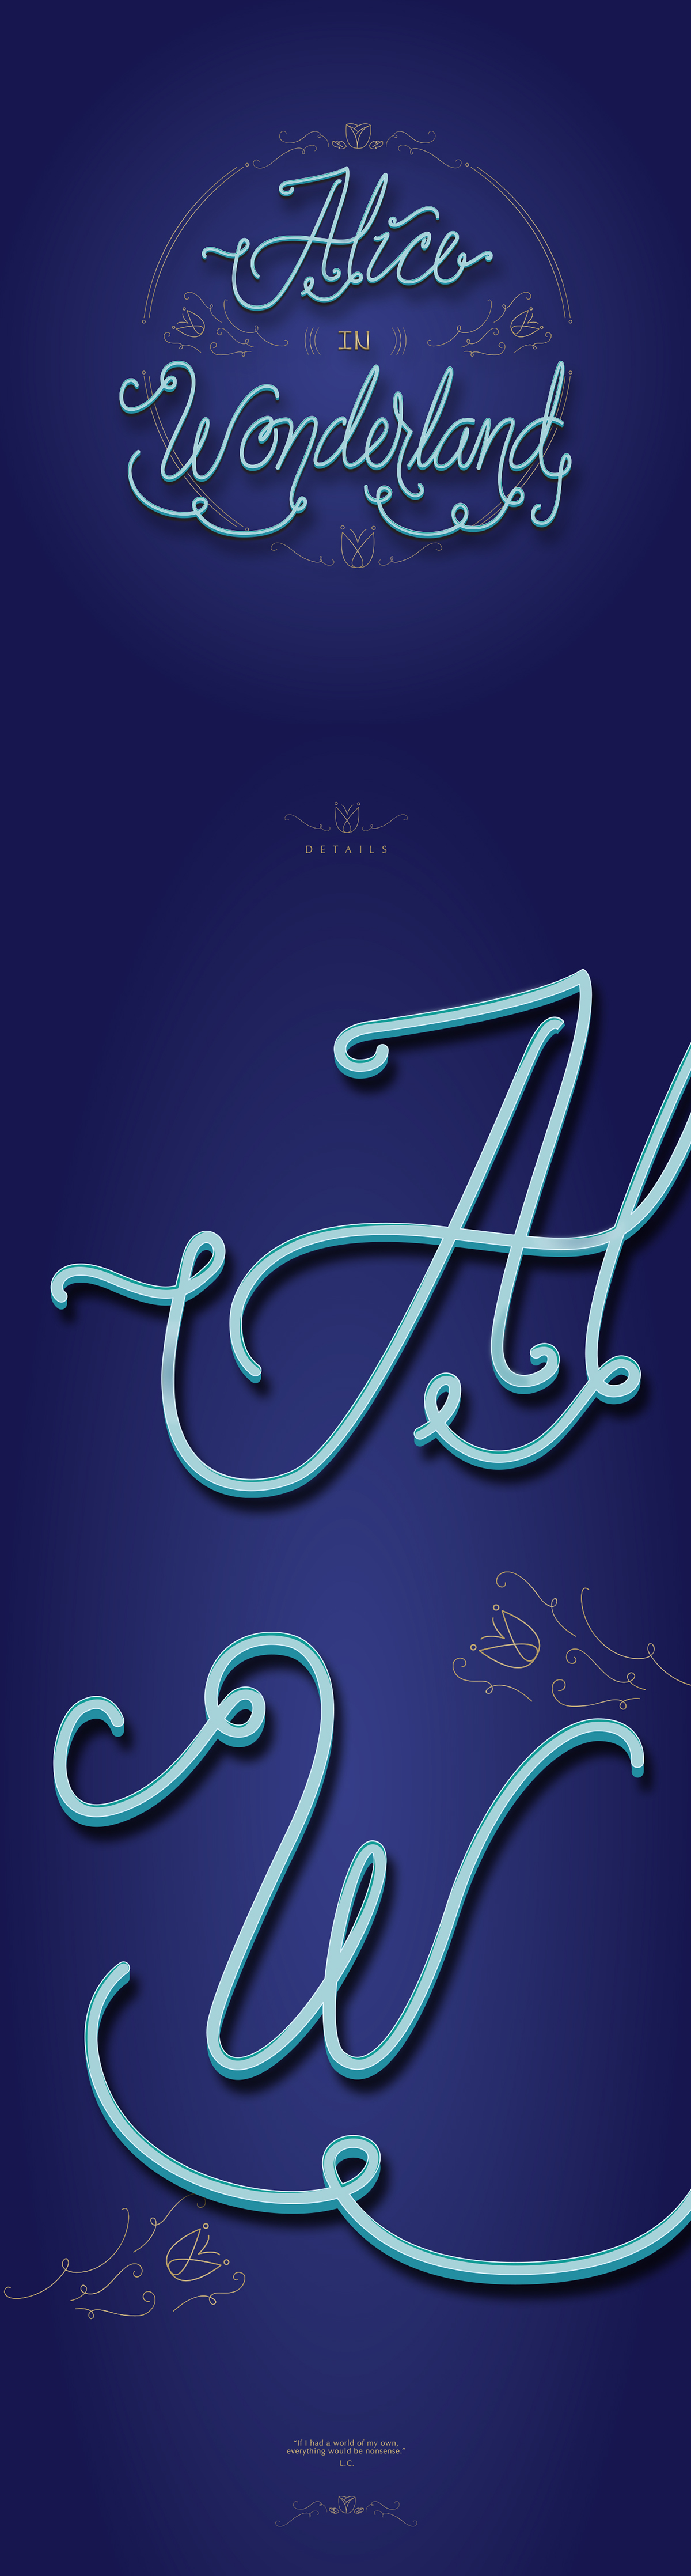 alice wonderland lettering